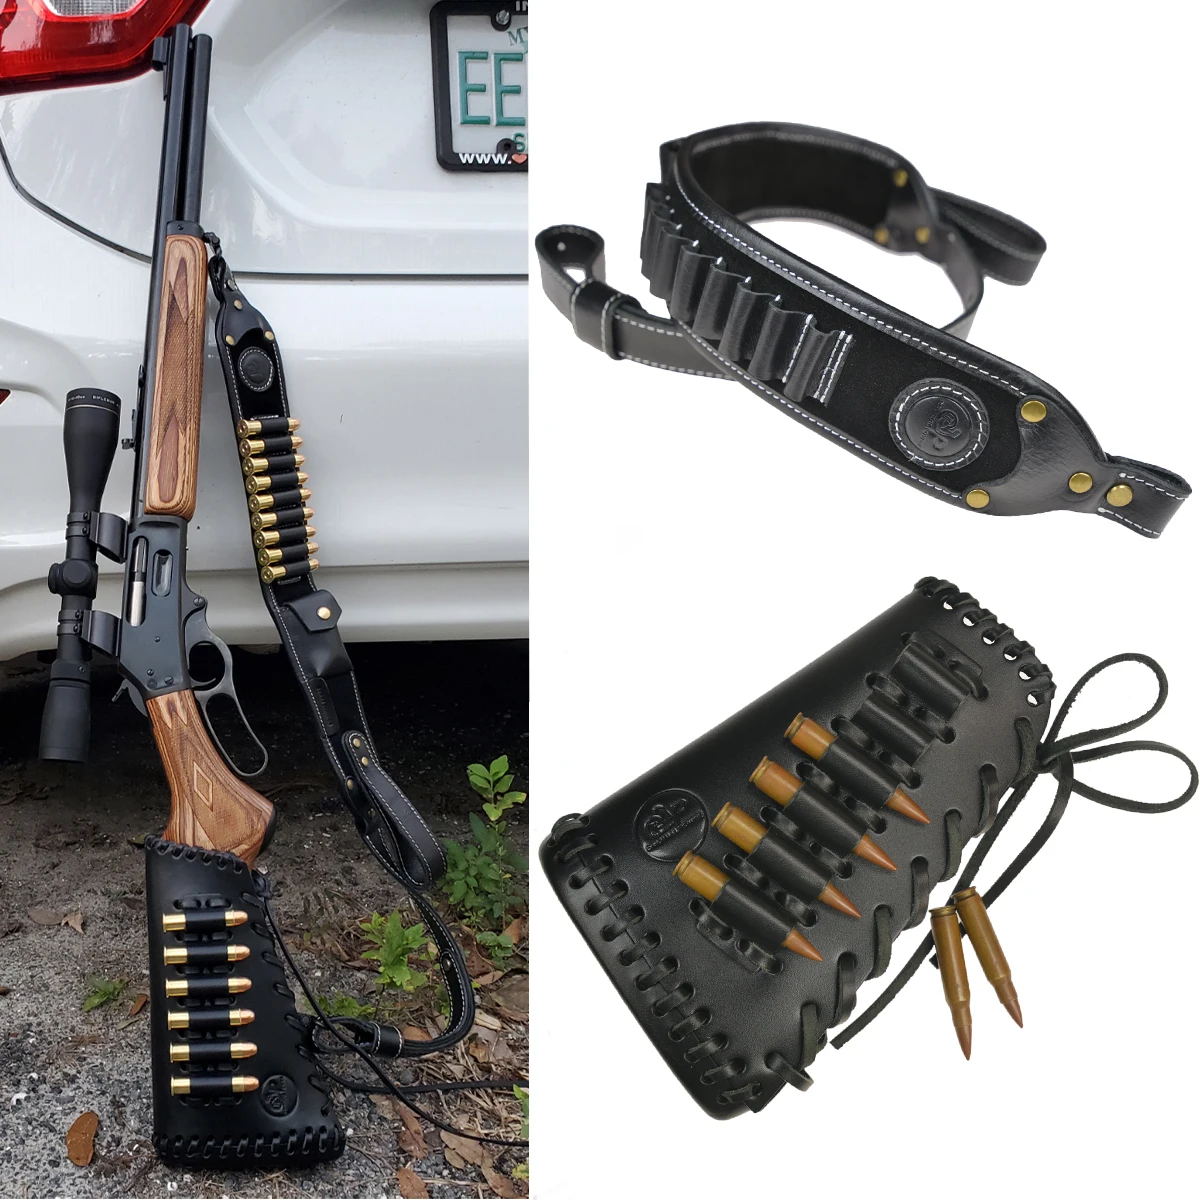 Juego de Funda de cuero completo para Rifle, accesorio para munición, con cabestrillo de hombro/Correa + 2 piezas giratorias en negro para. 308 .30-06, 1 Juego